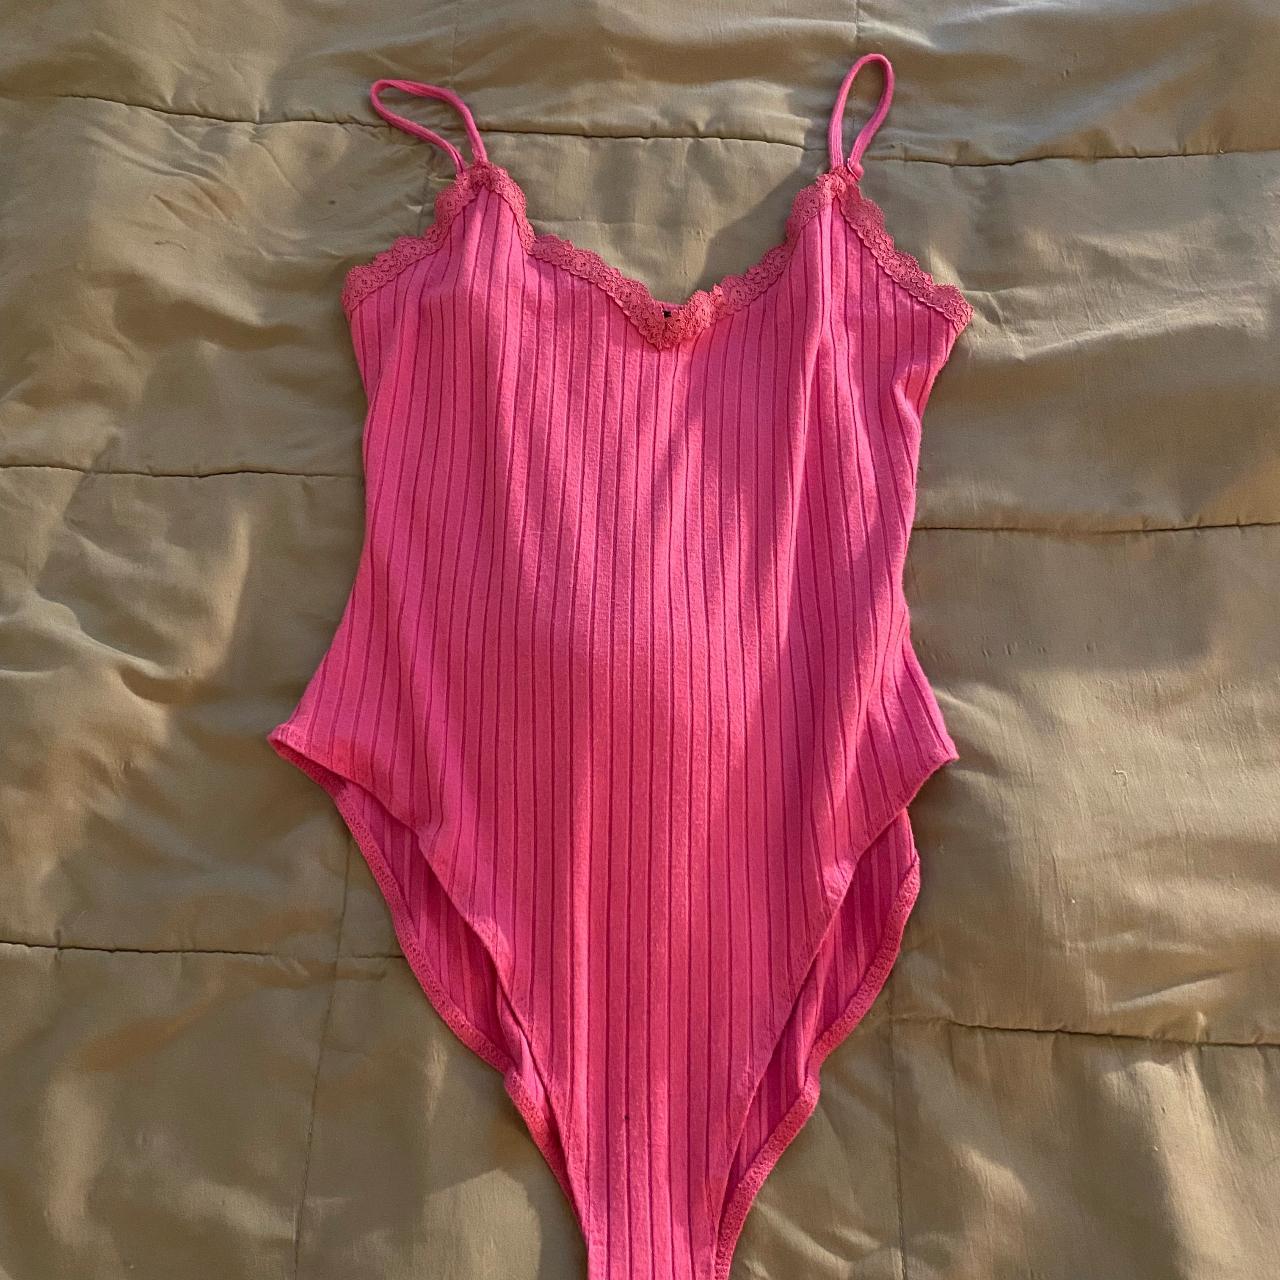 Pink lace bodysuit, size small - Depop